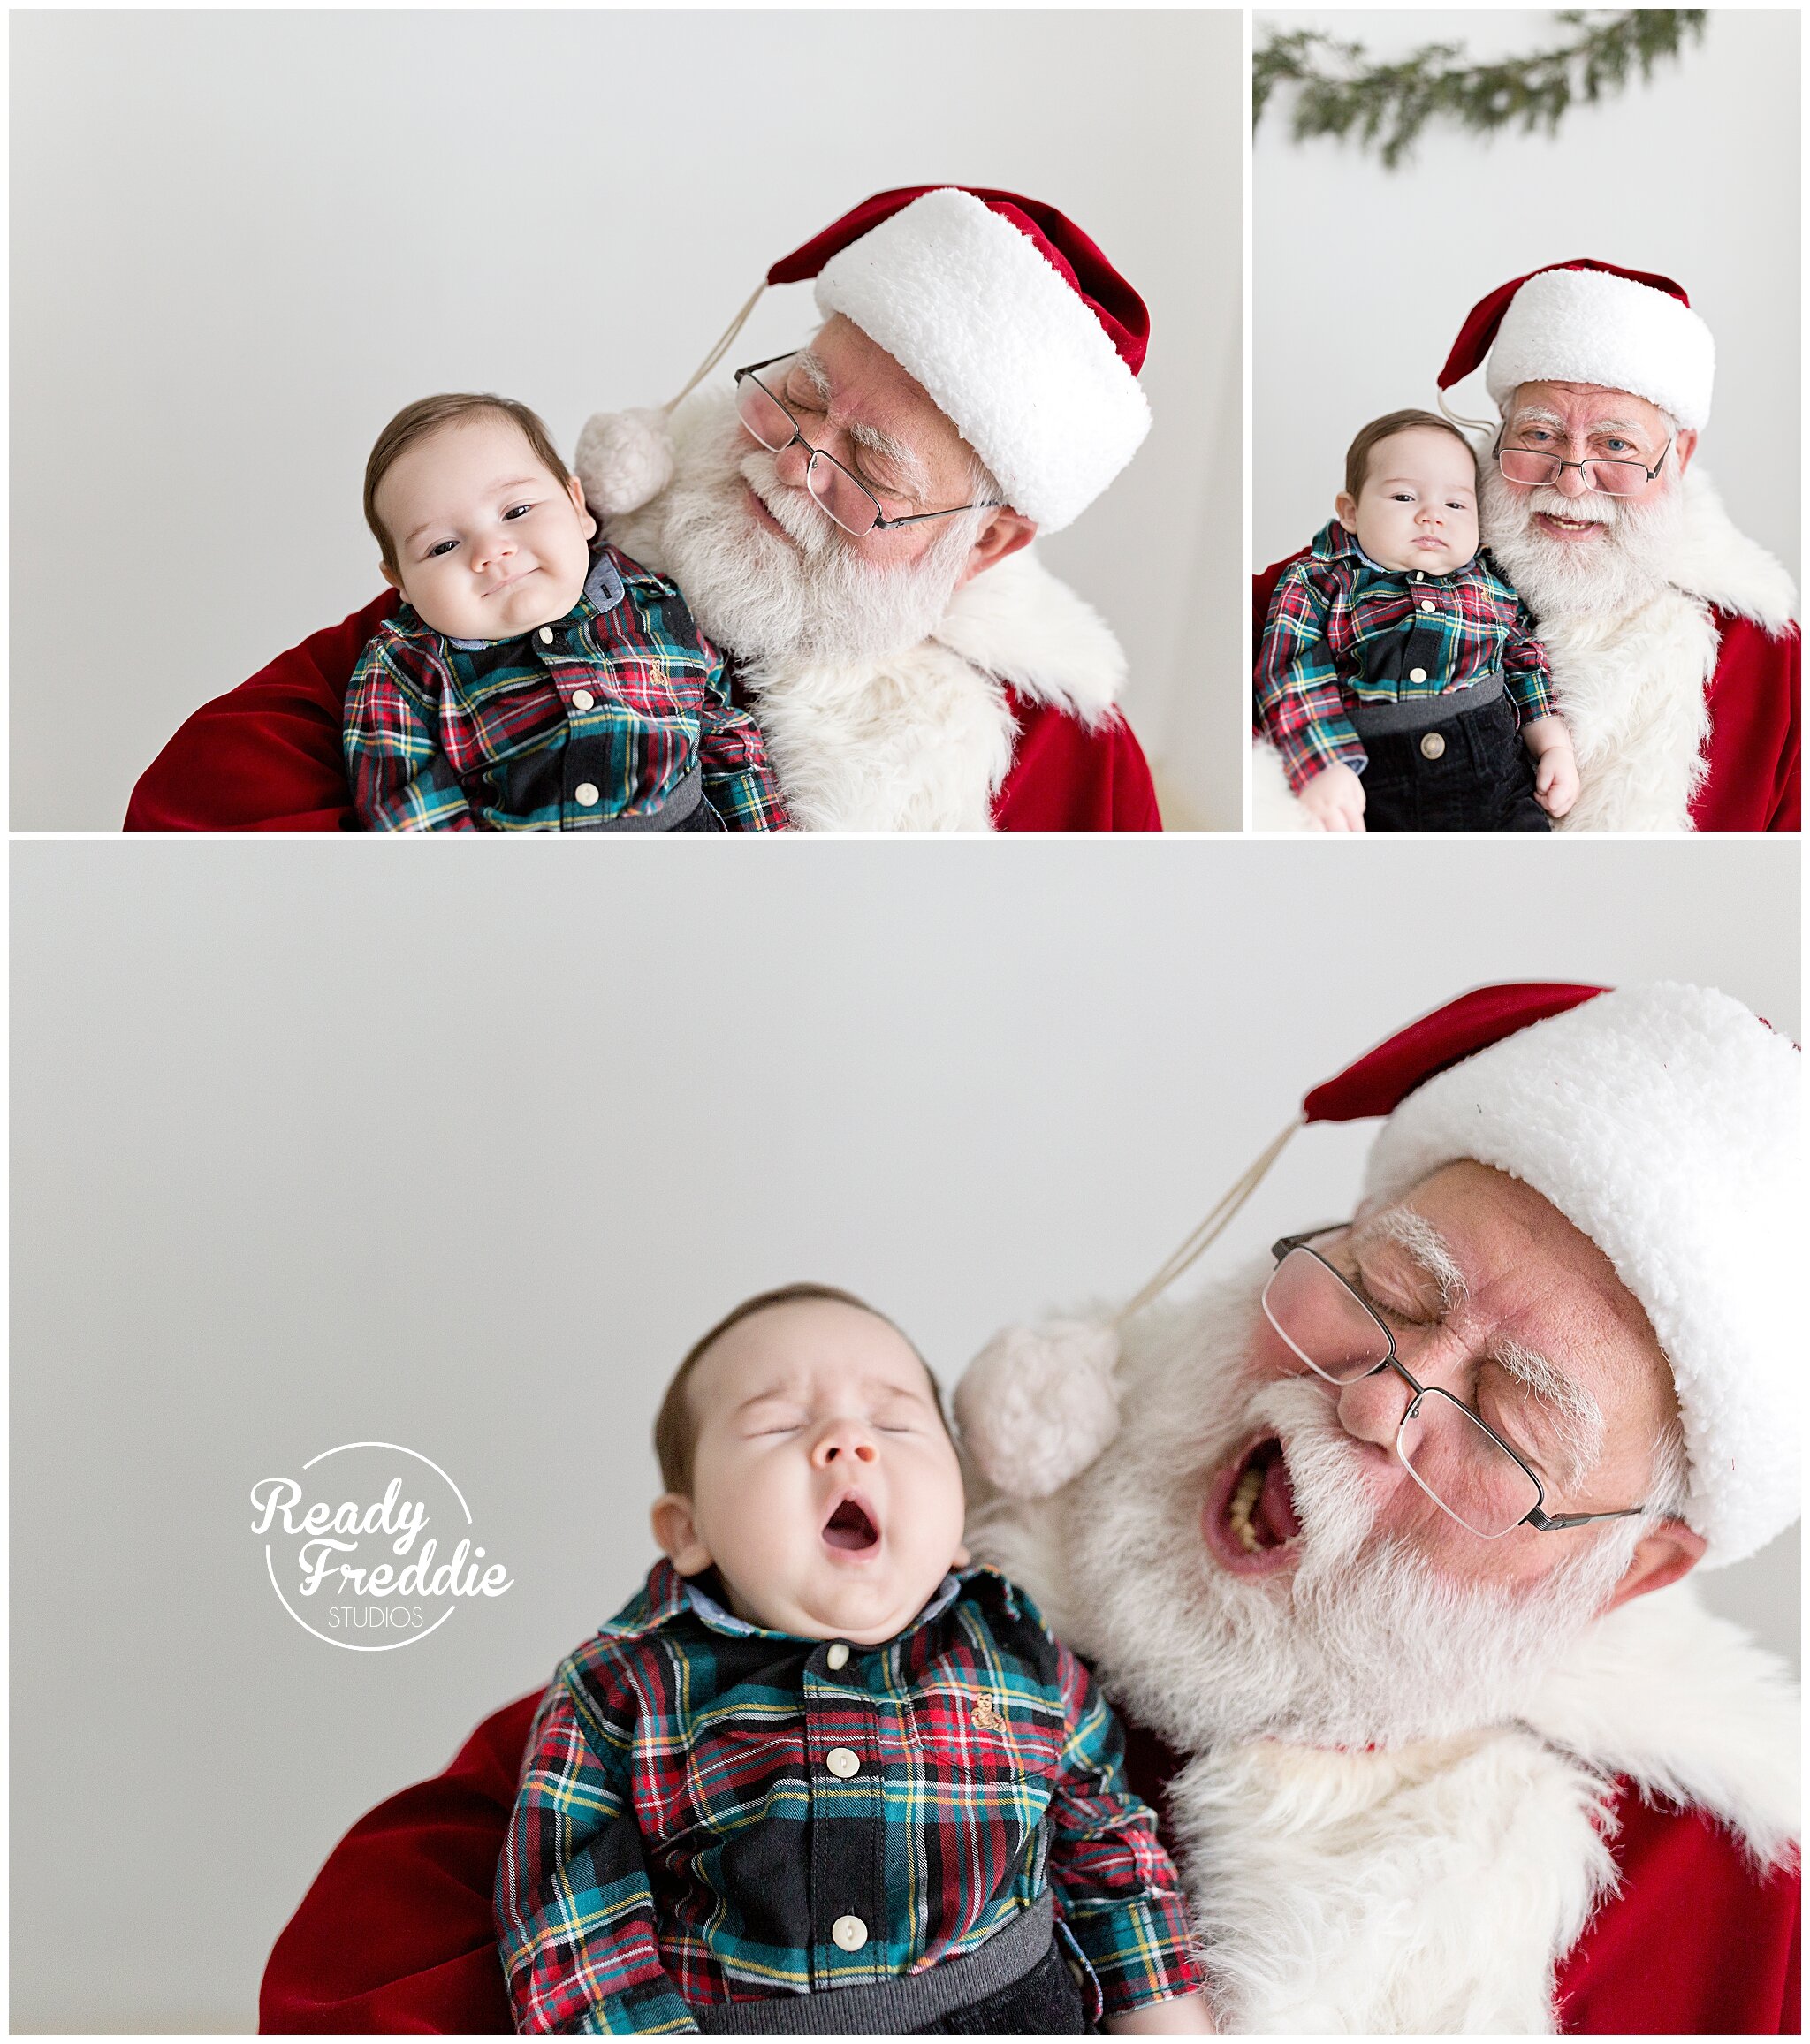 Baby Yawning with Santa | Ready Freddie Studios Miami, FL